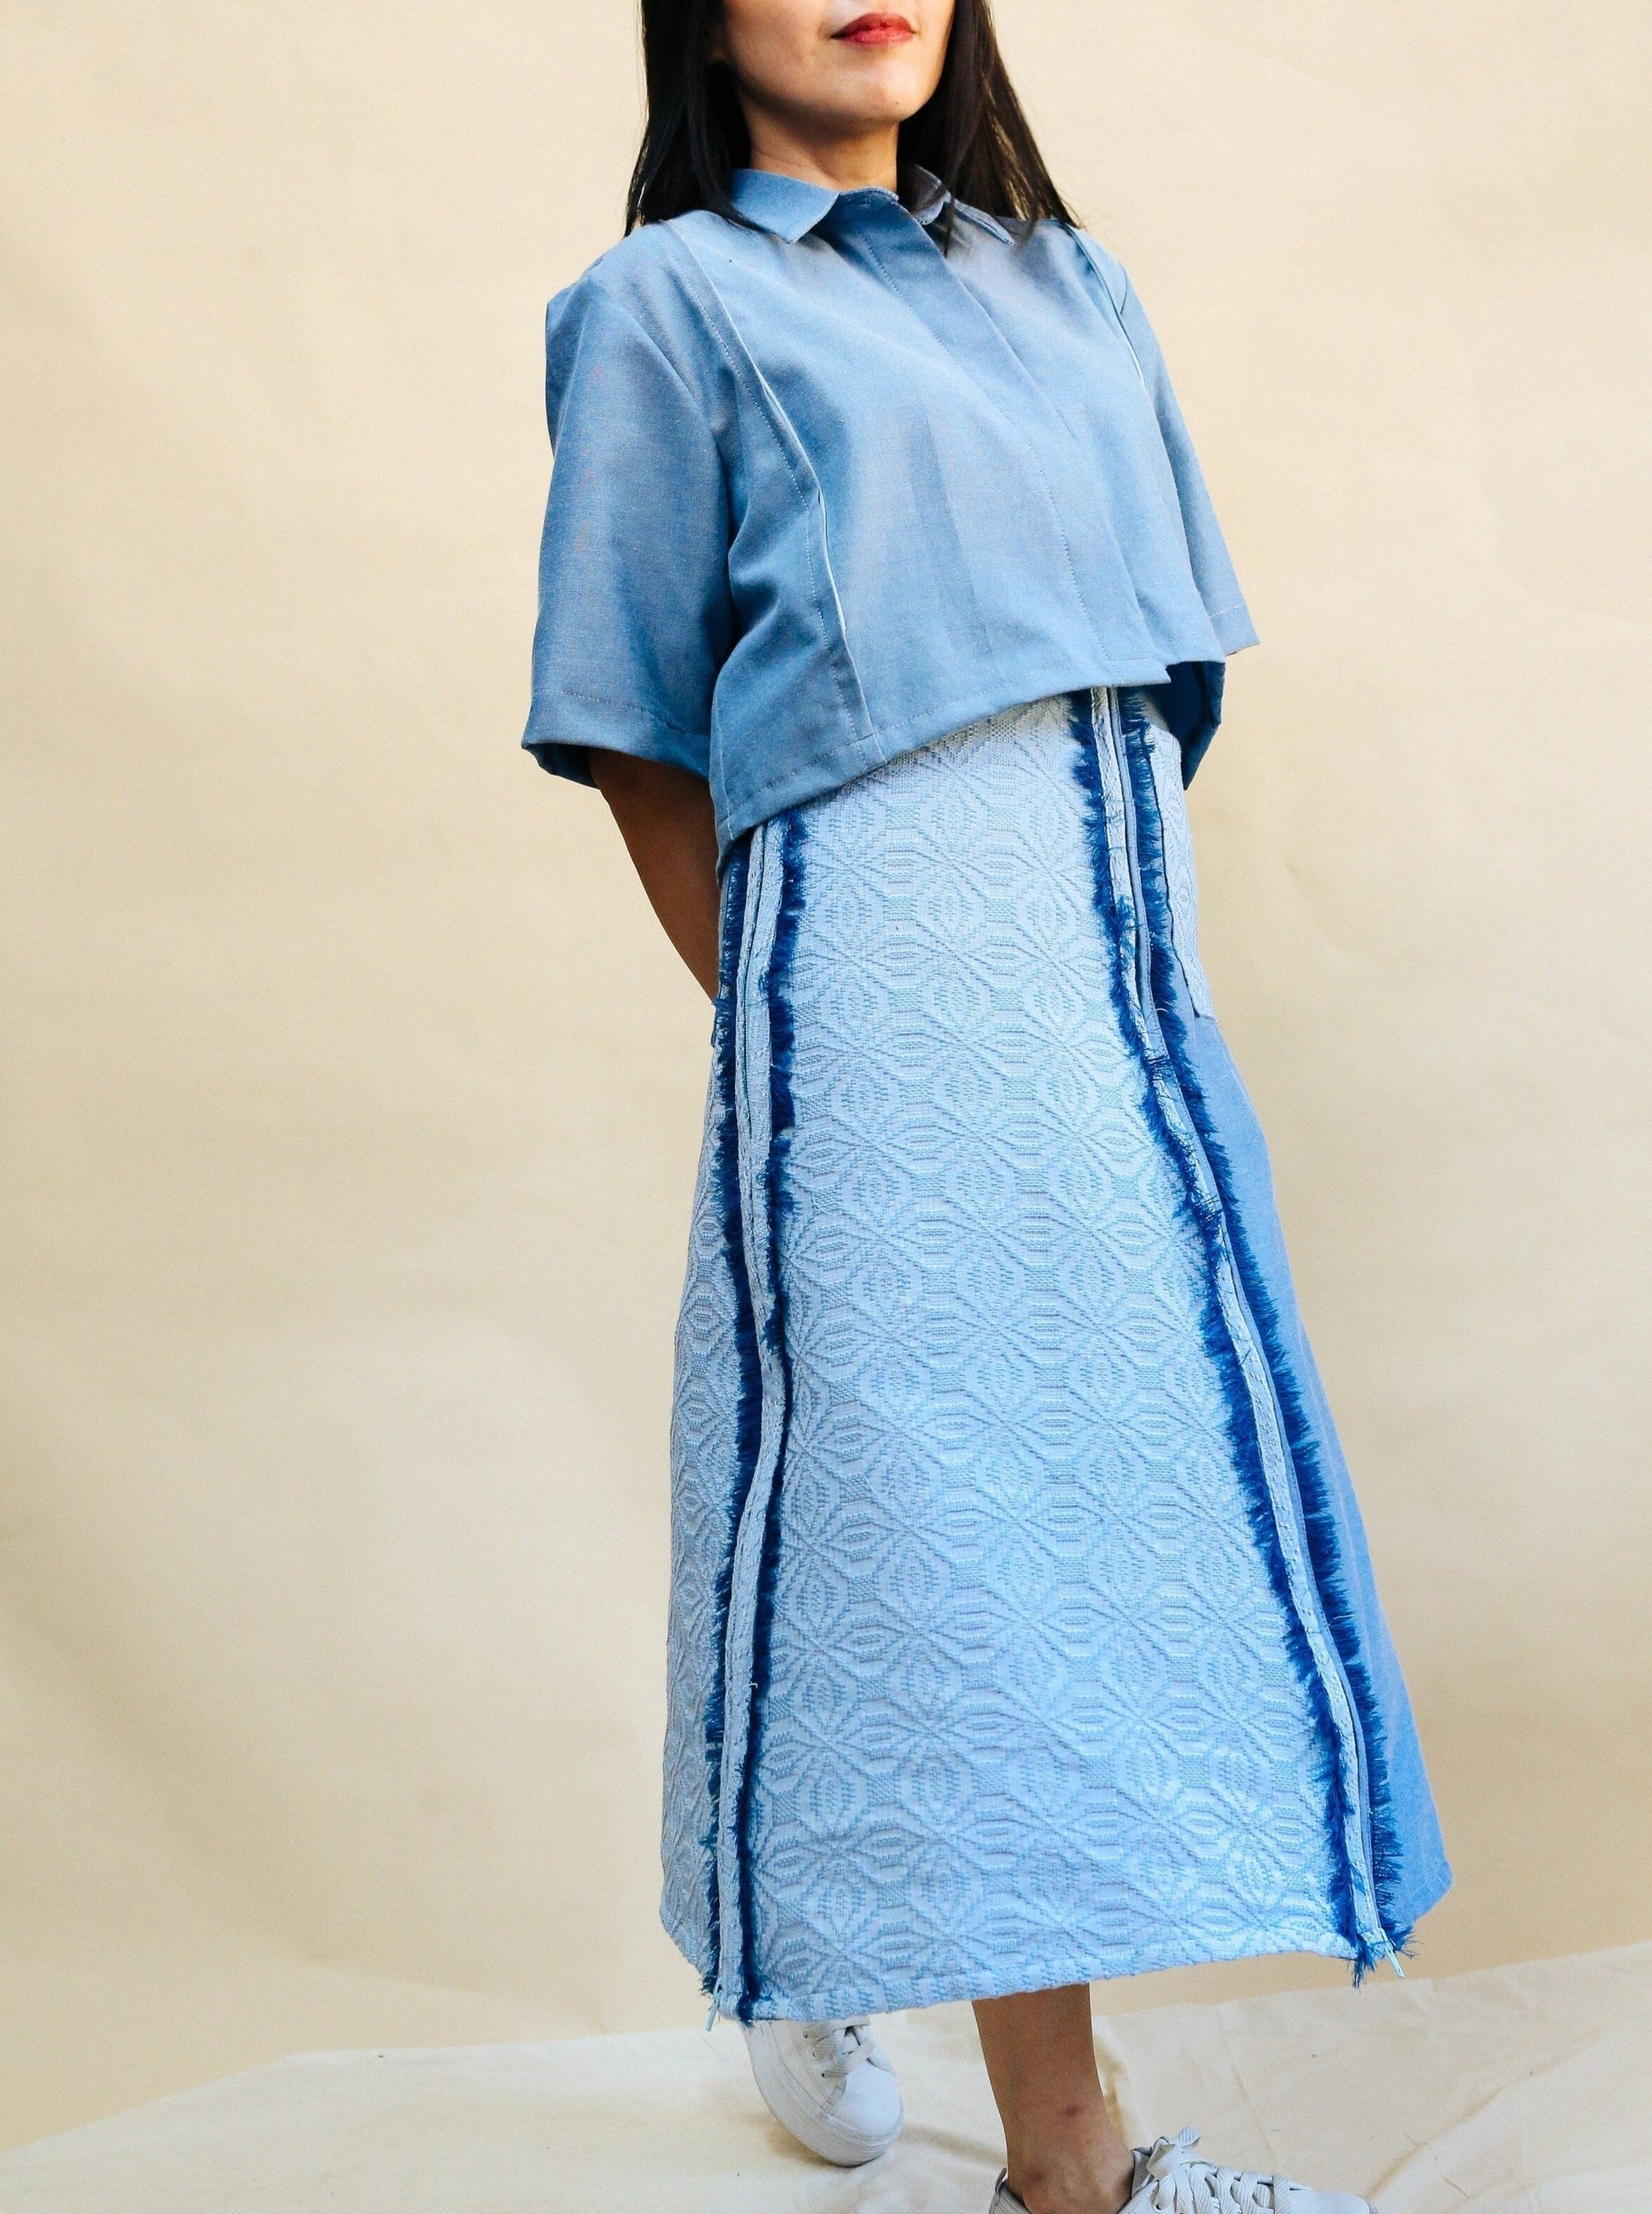 4-Way A-Line Skirt Chambray & Binetwagan Fashion Rags2Riches